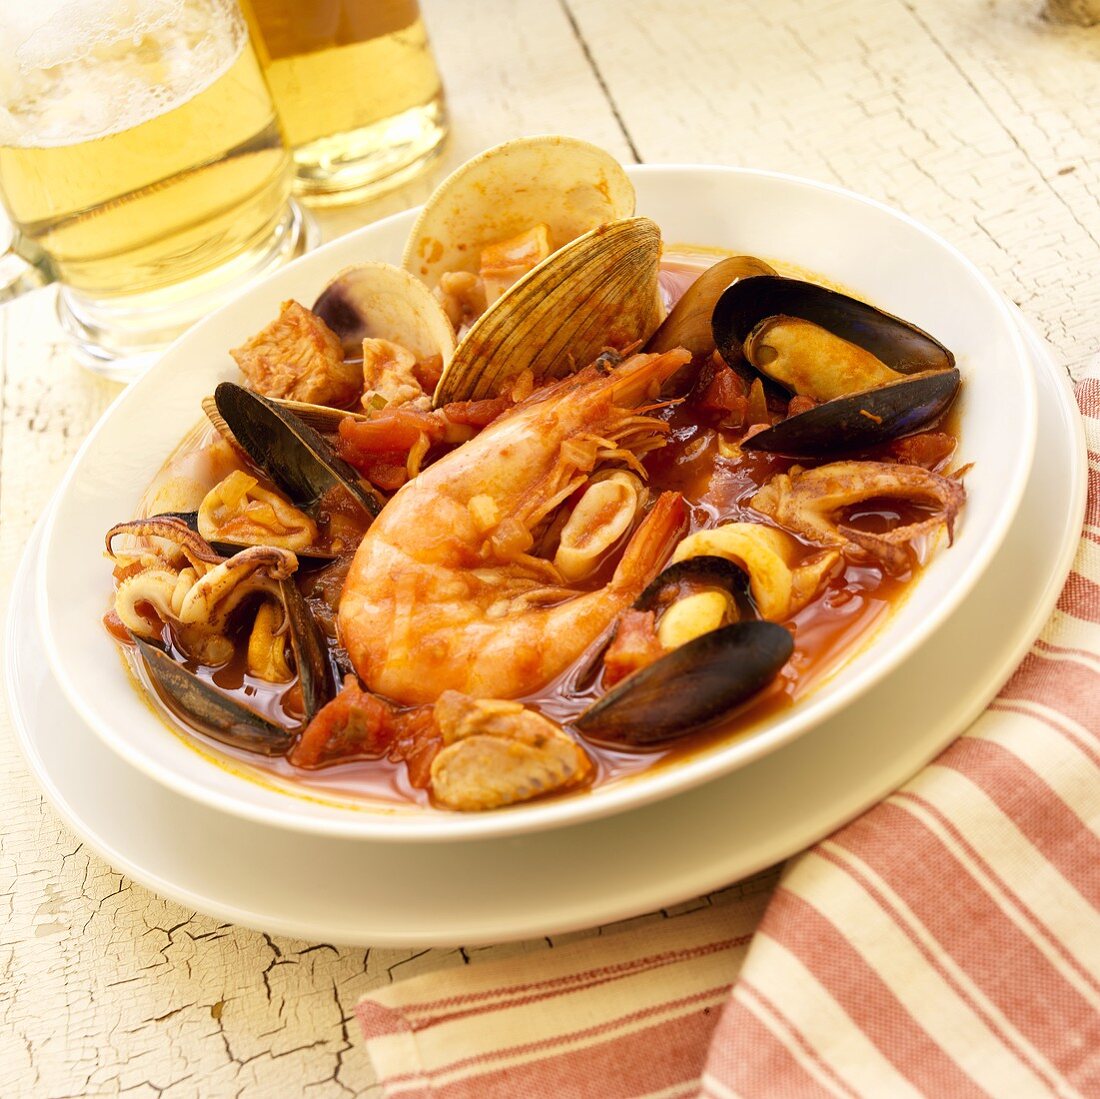 Bowl of Seafood Stew with Shellfish and Calamari